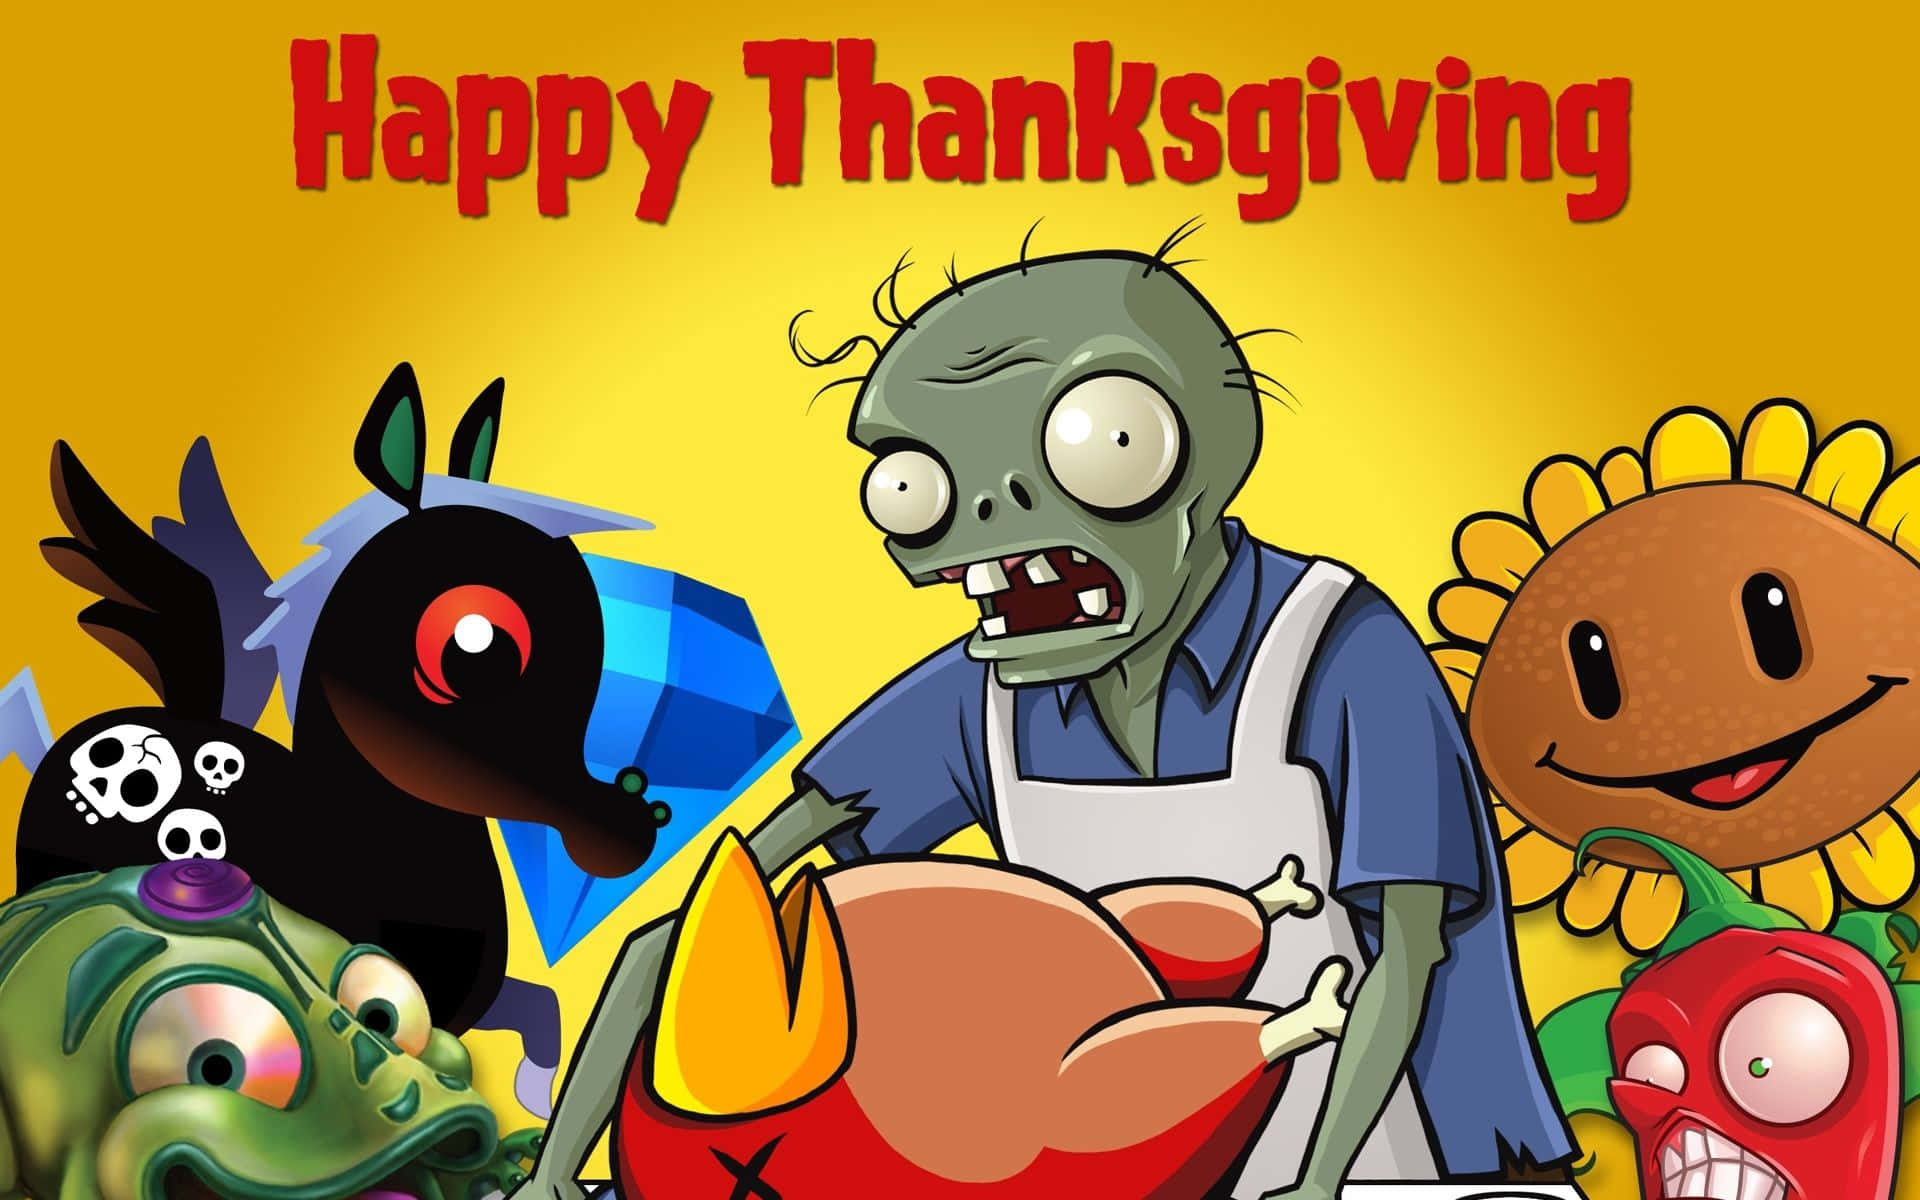 Free Funny Thanksgiving Wallpaper Downloads, [100+] Funny Thanksgiving  Wallpapers for FREE 